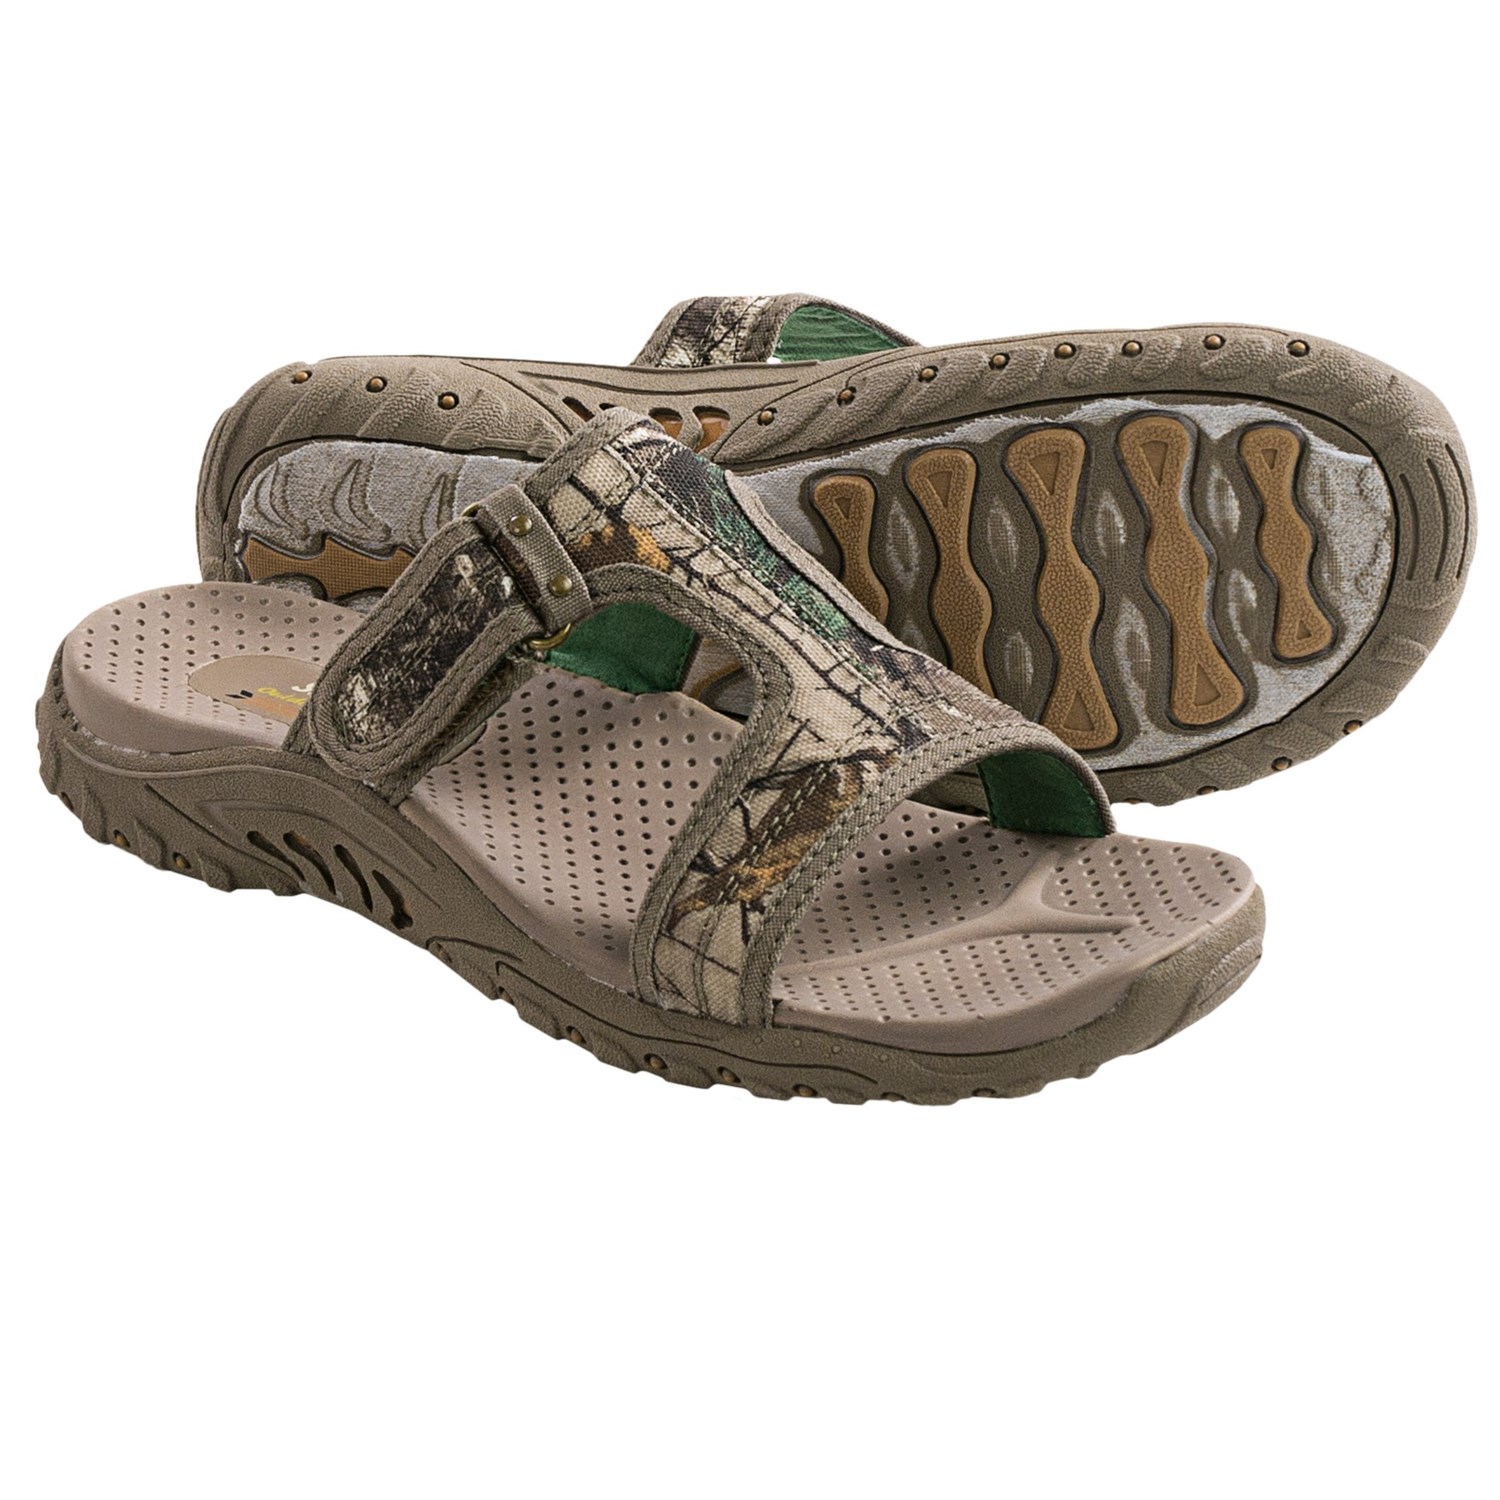 sketchers outdoor lifestyle sandals